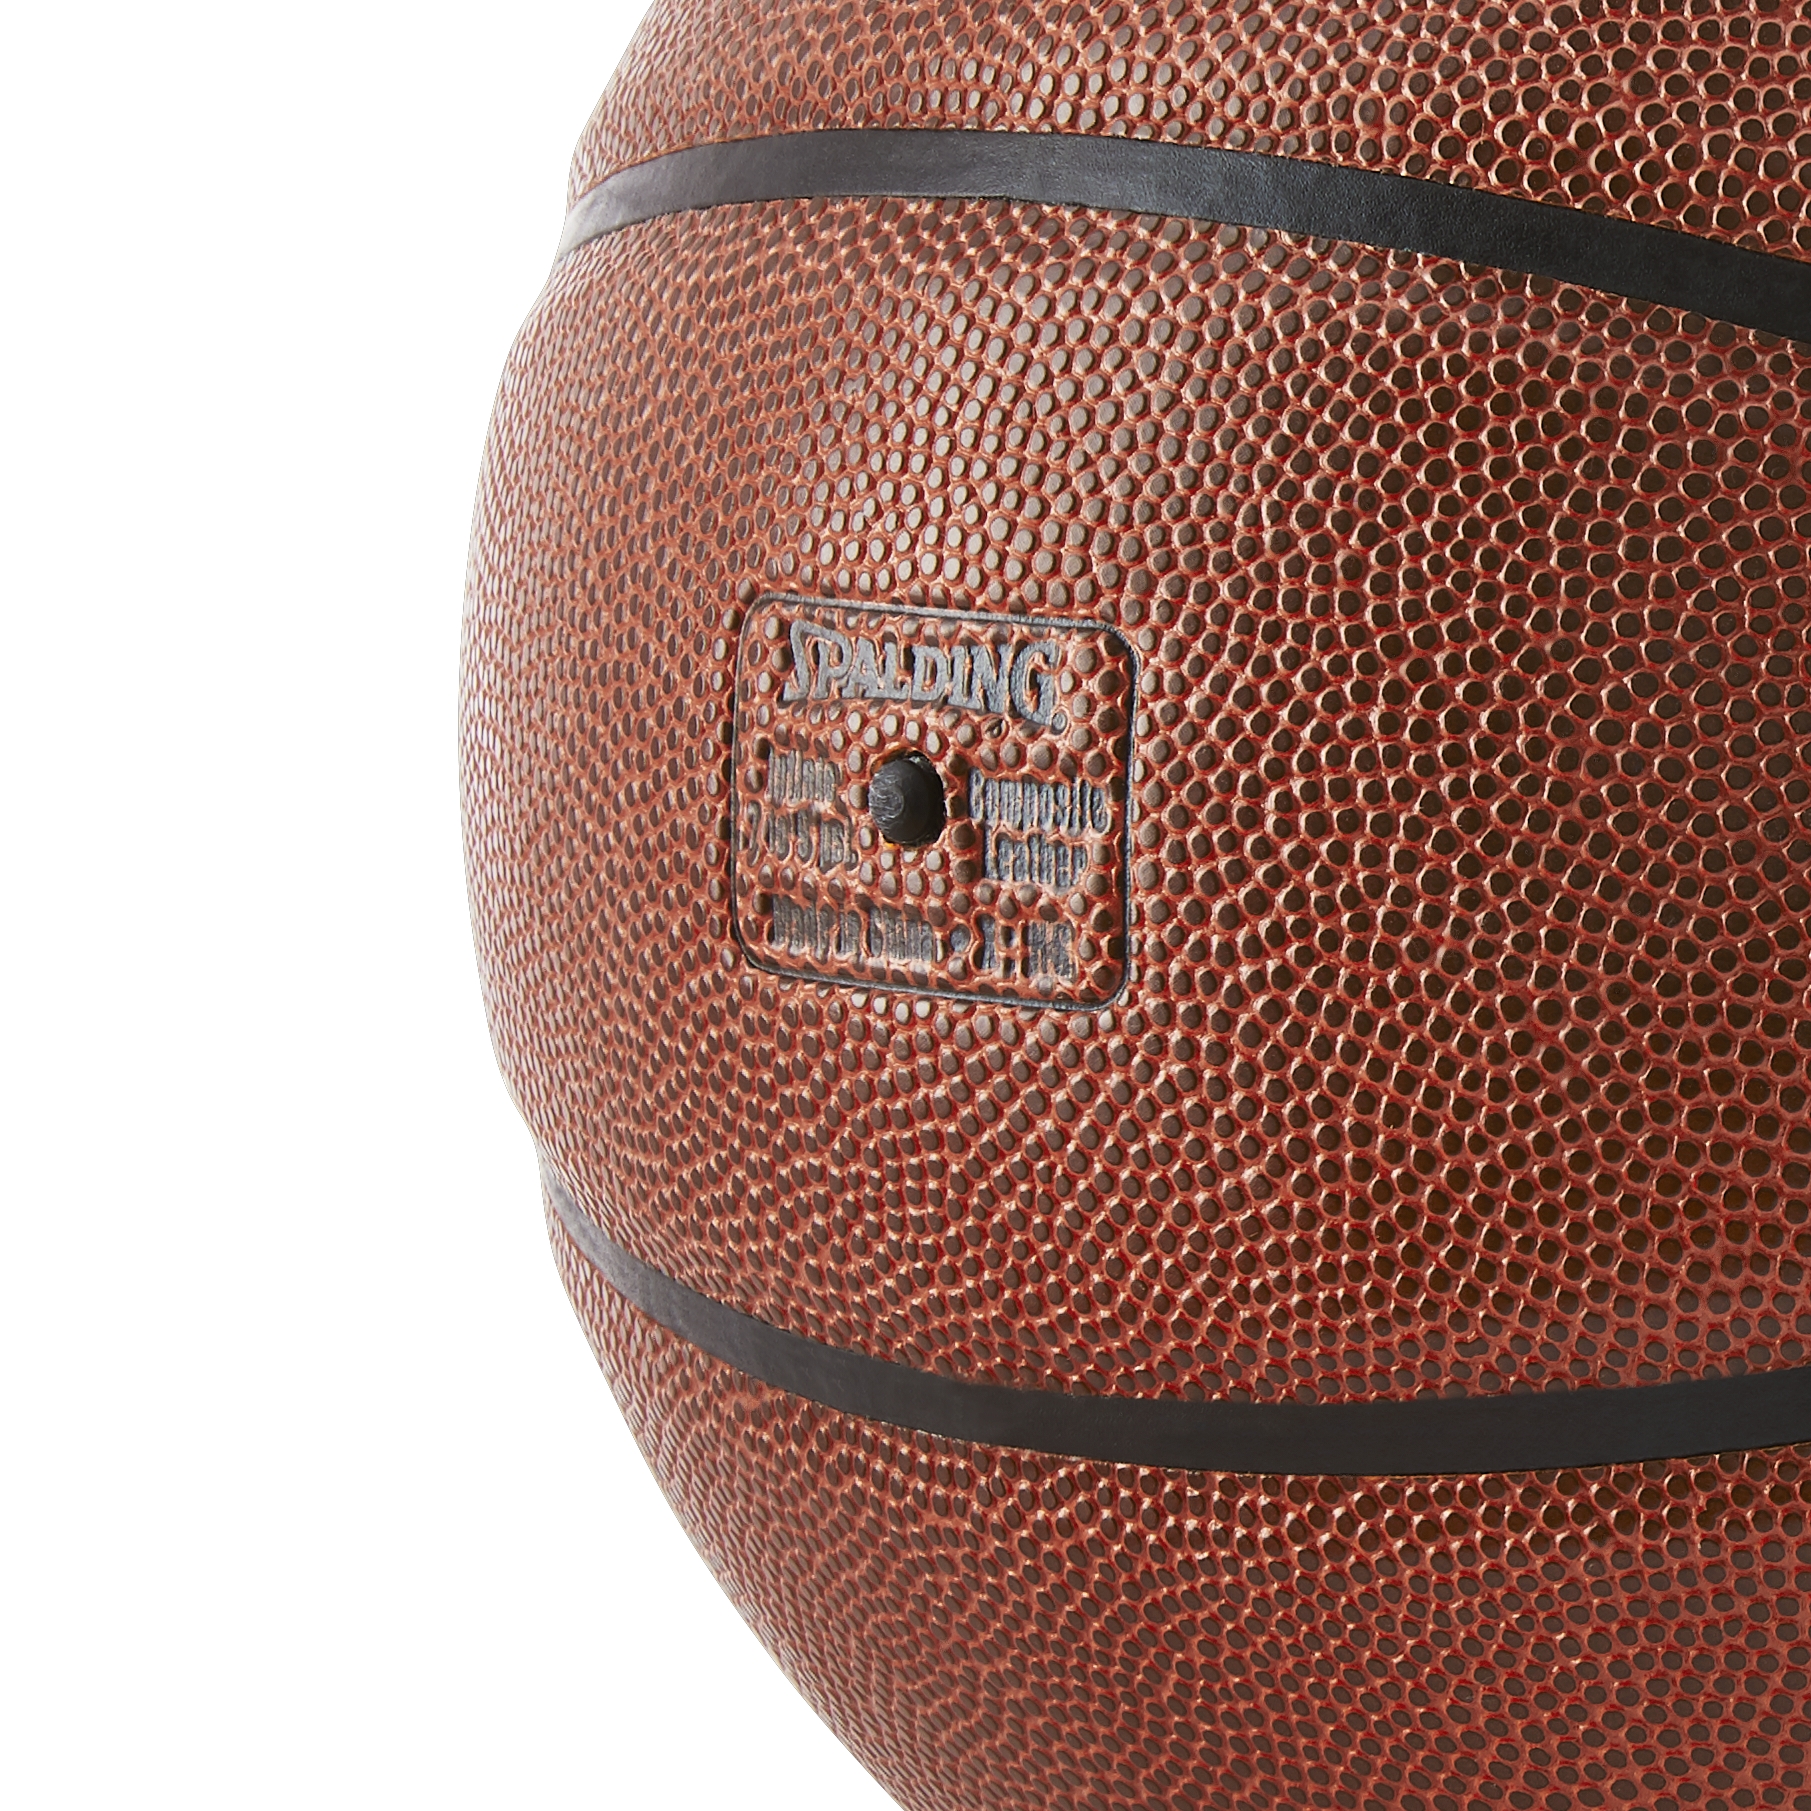 Spalding NBA Neverflat Premium Basketball - image 5 of 6